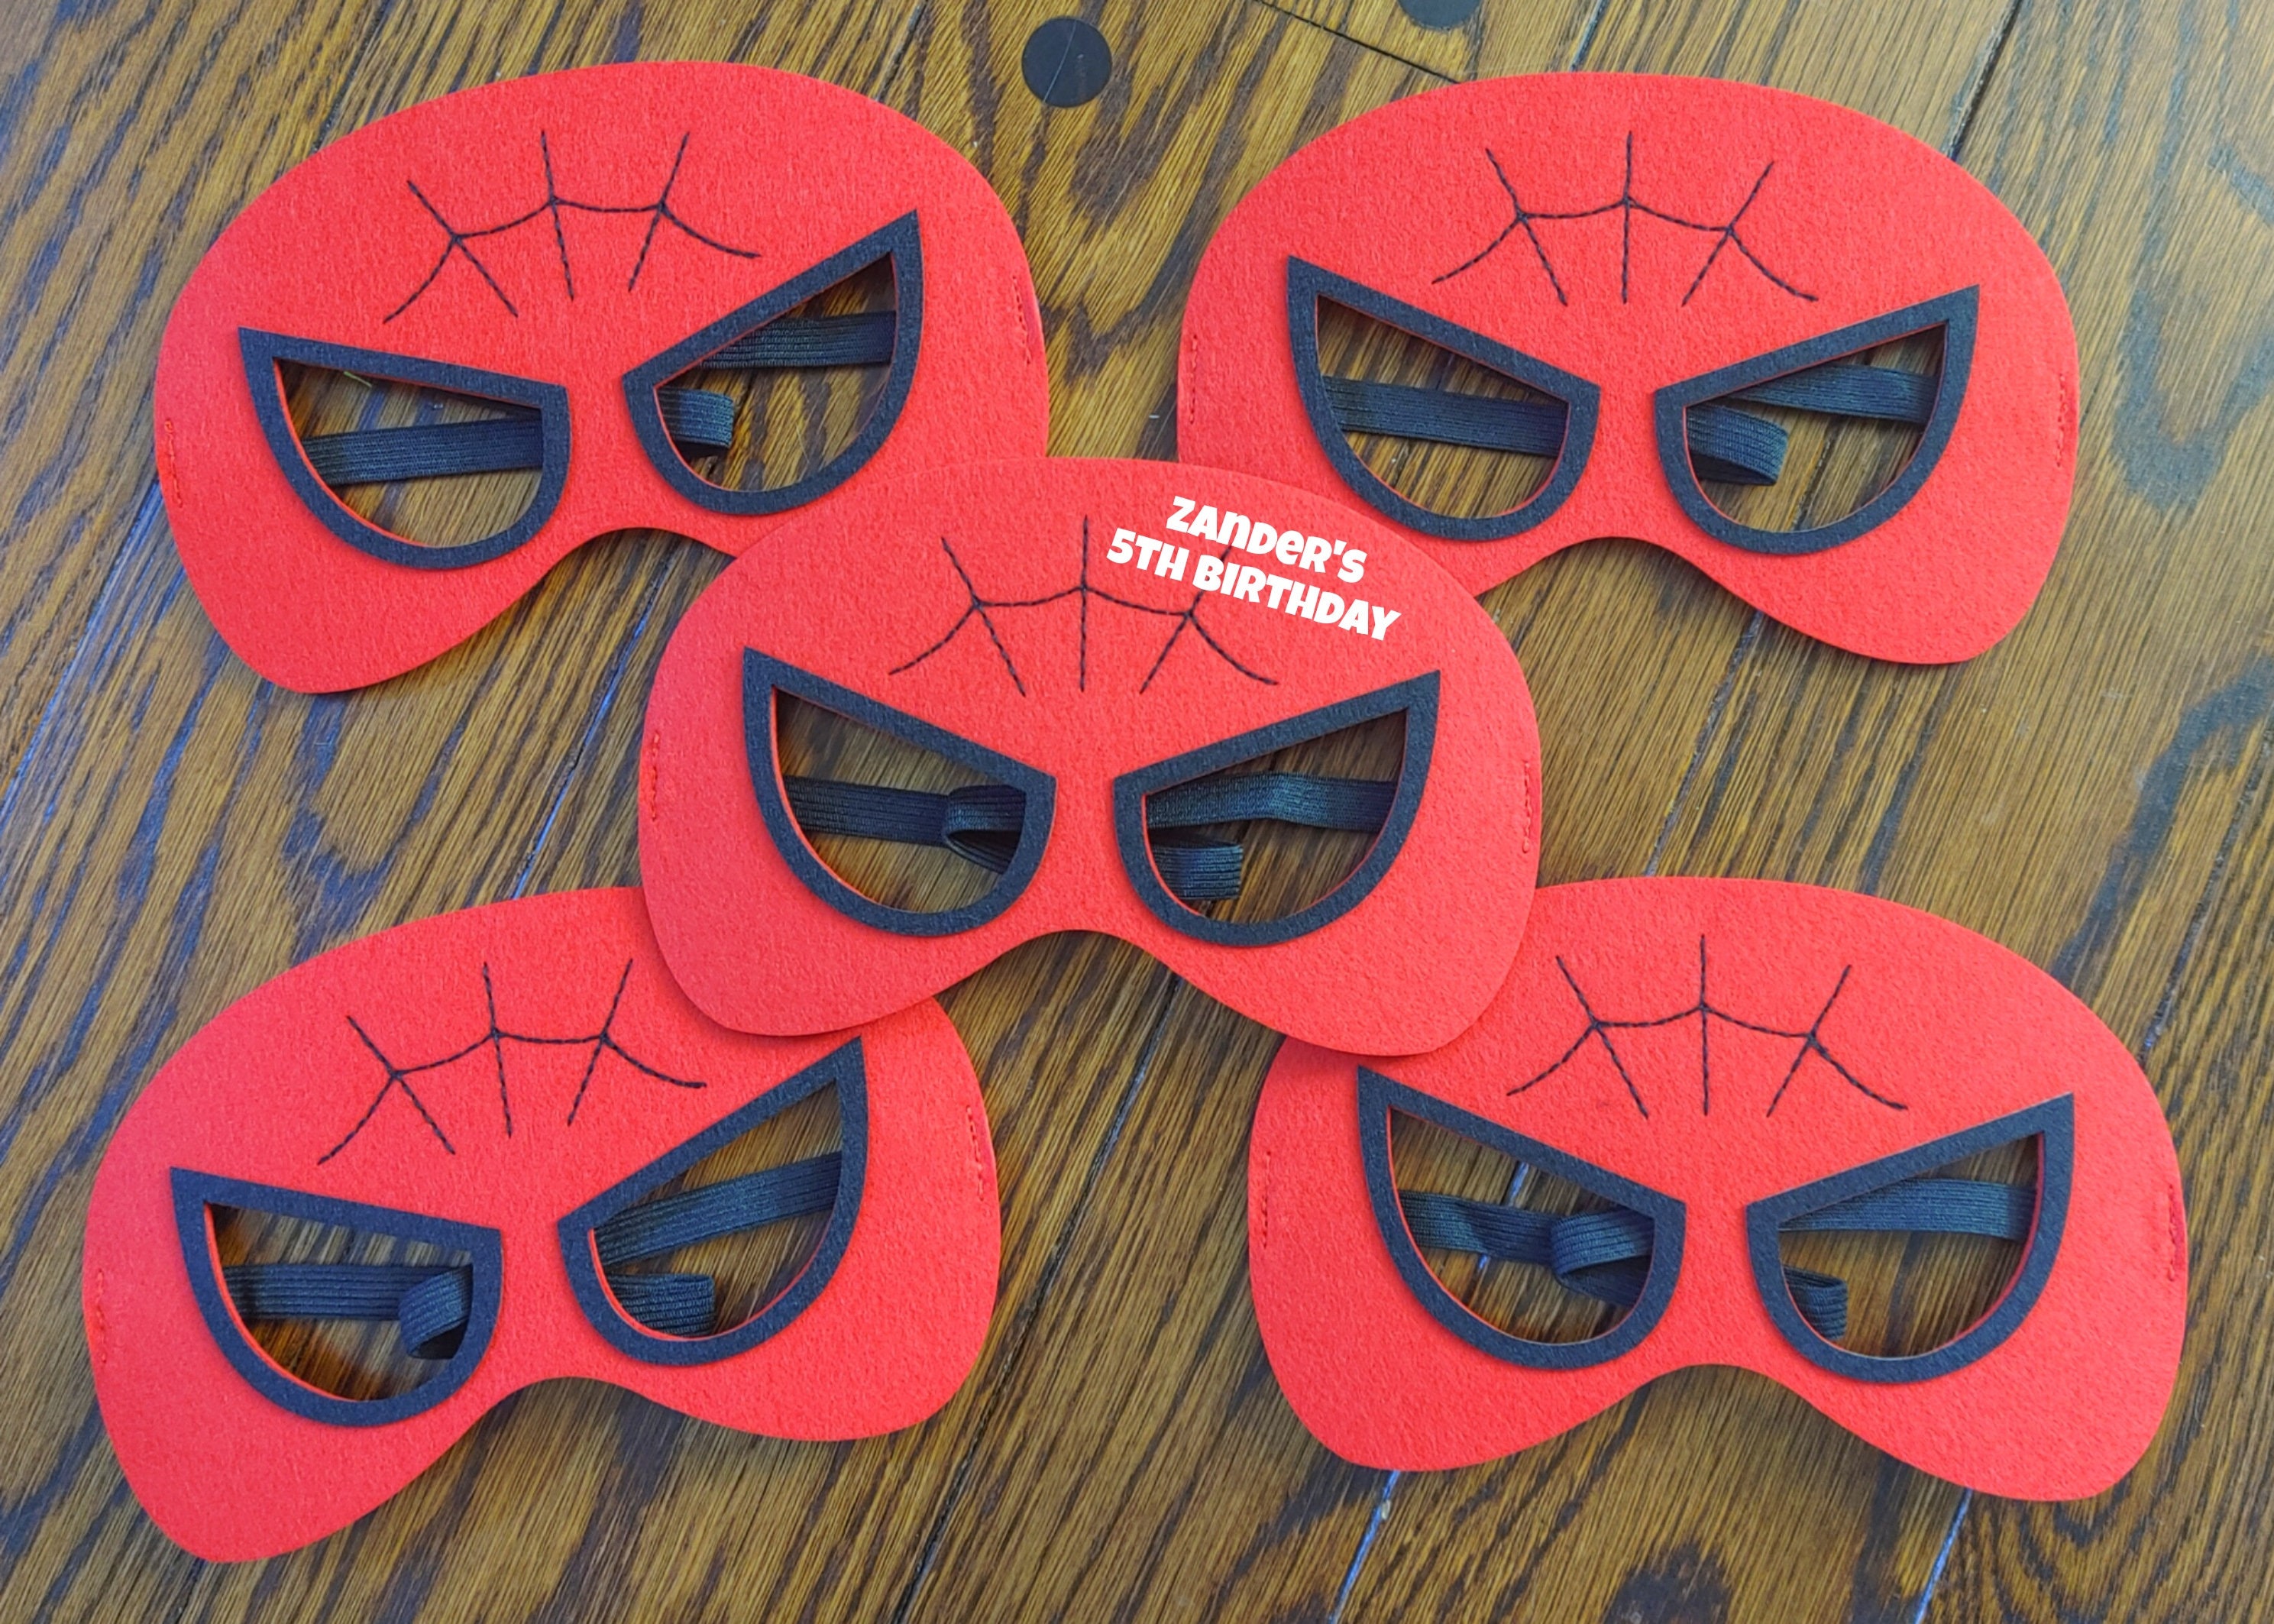 Máscaras de superhéroe para fiestas infantiles (32 paquetes) de